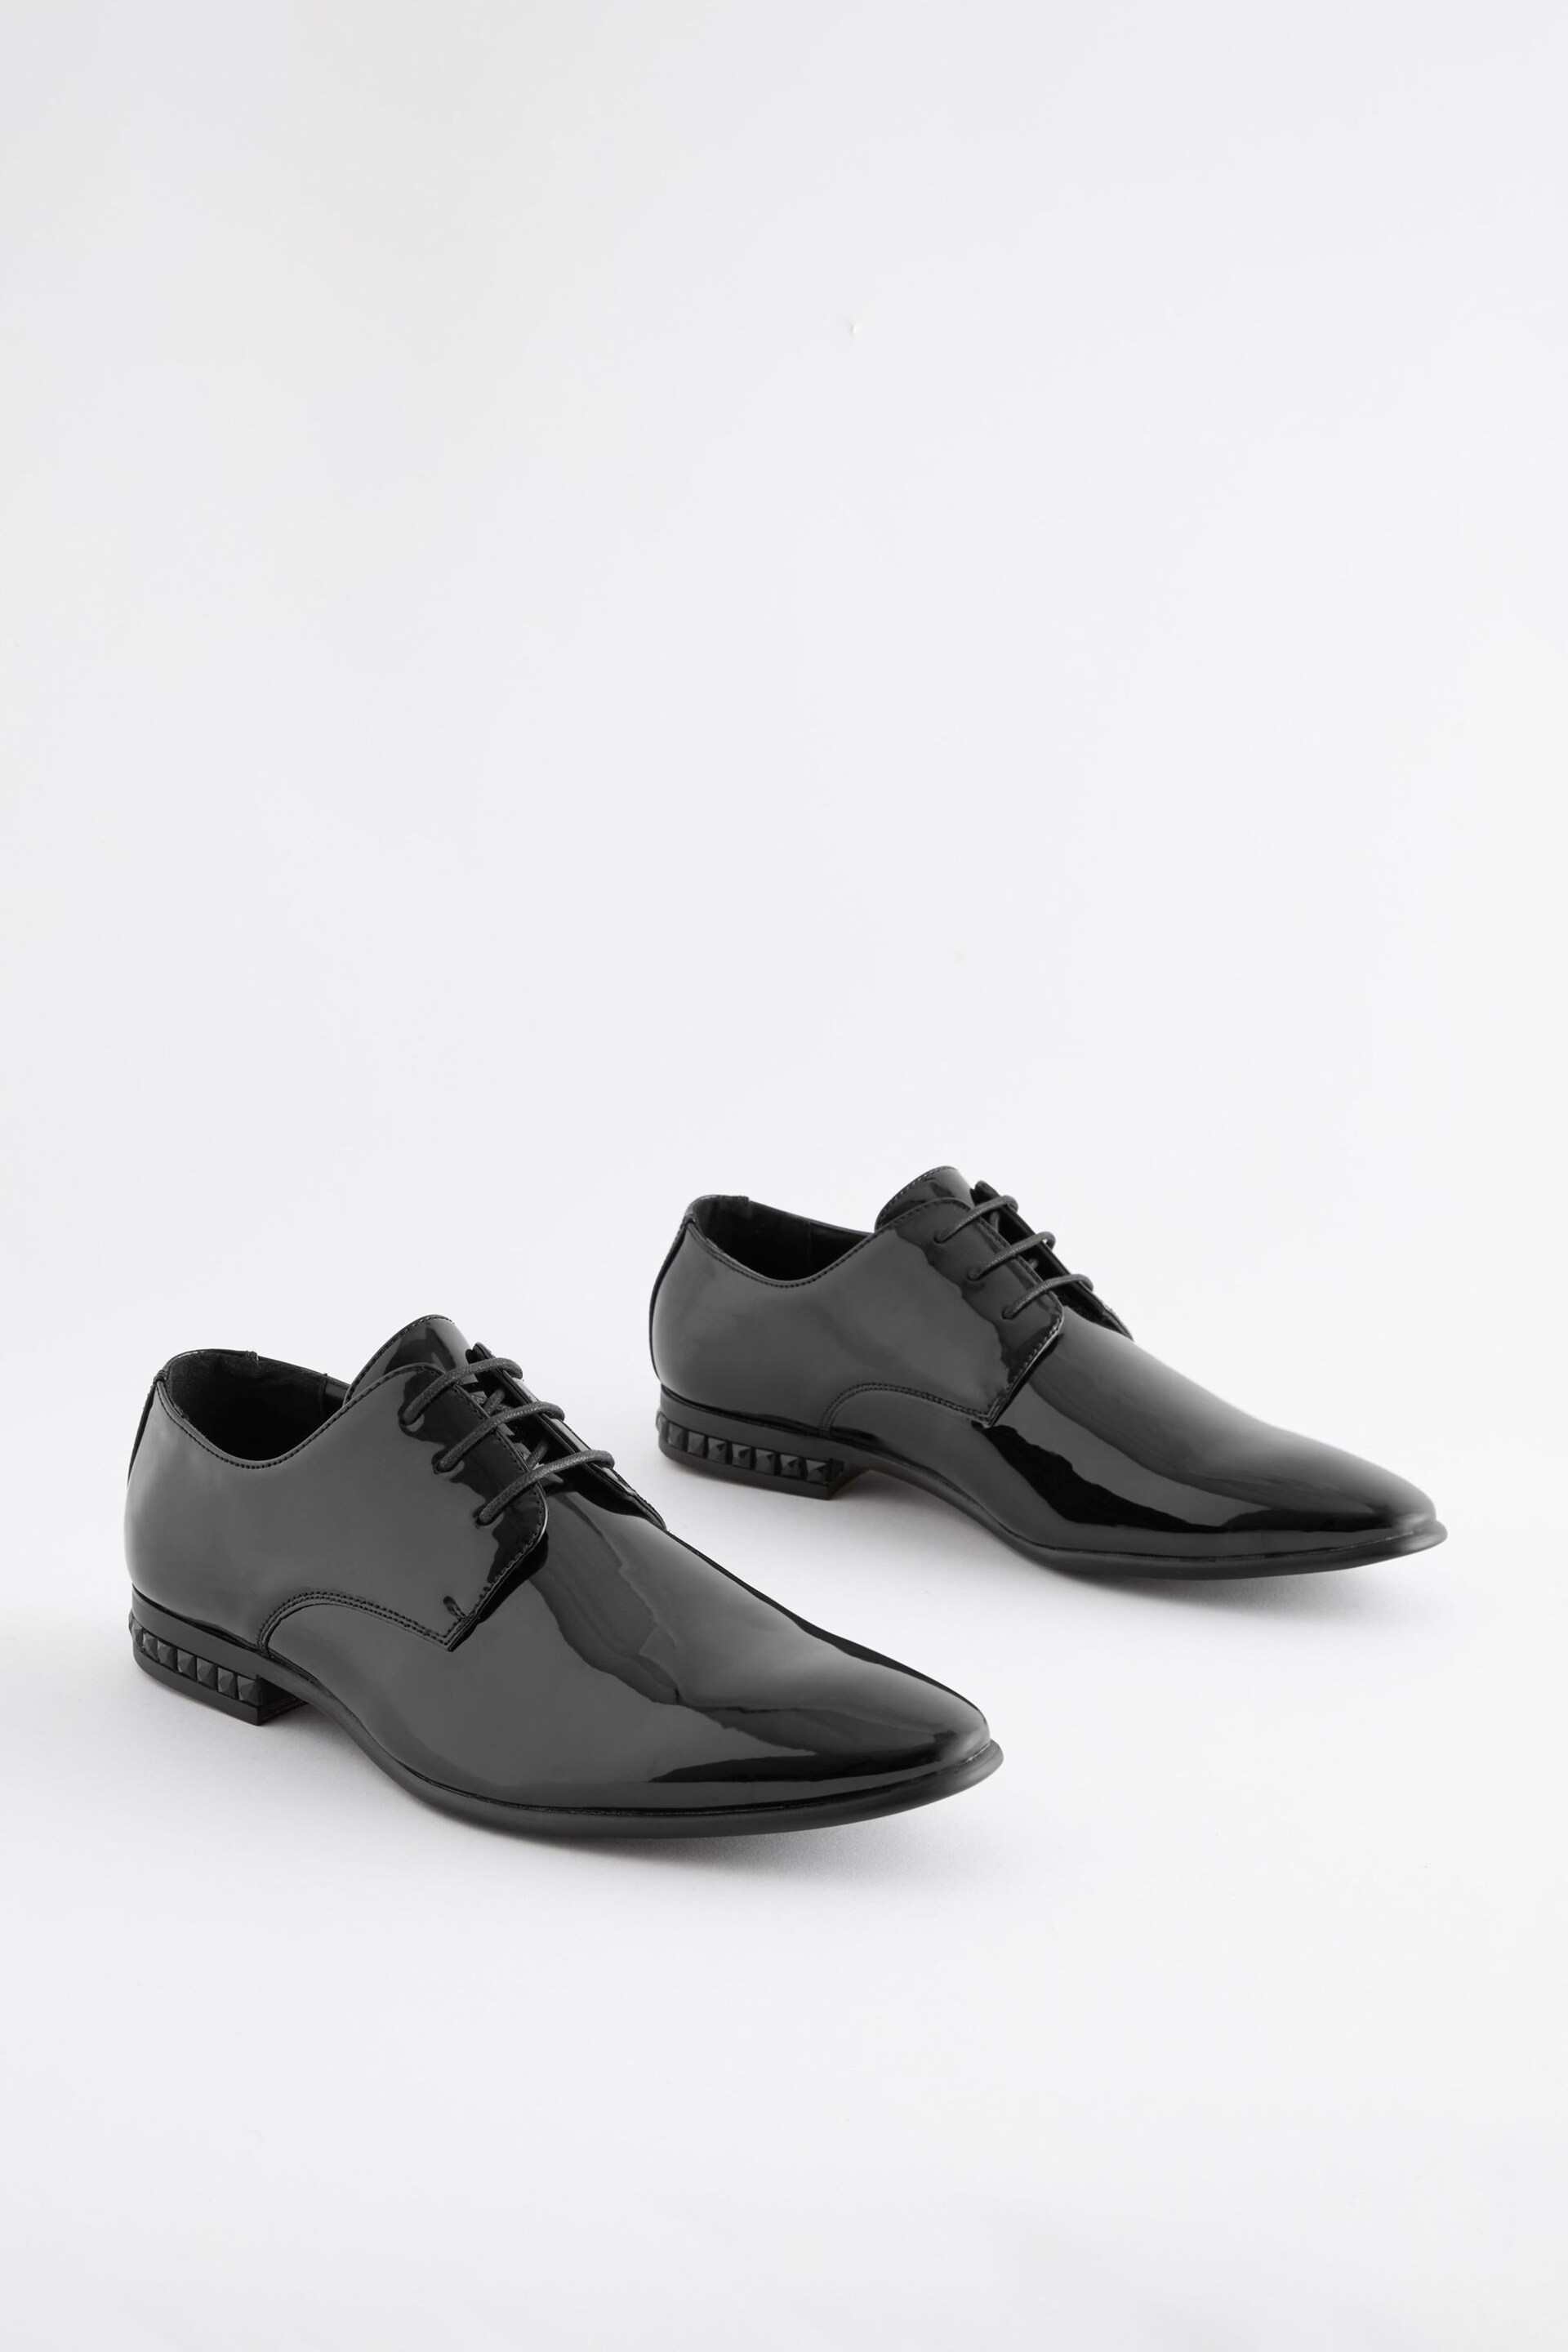 Black High Shine Jewel Trim Patent Derby Shoes - Image 1 of 5